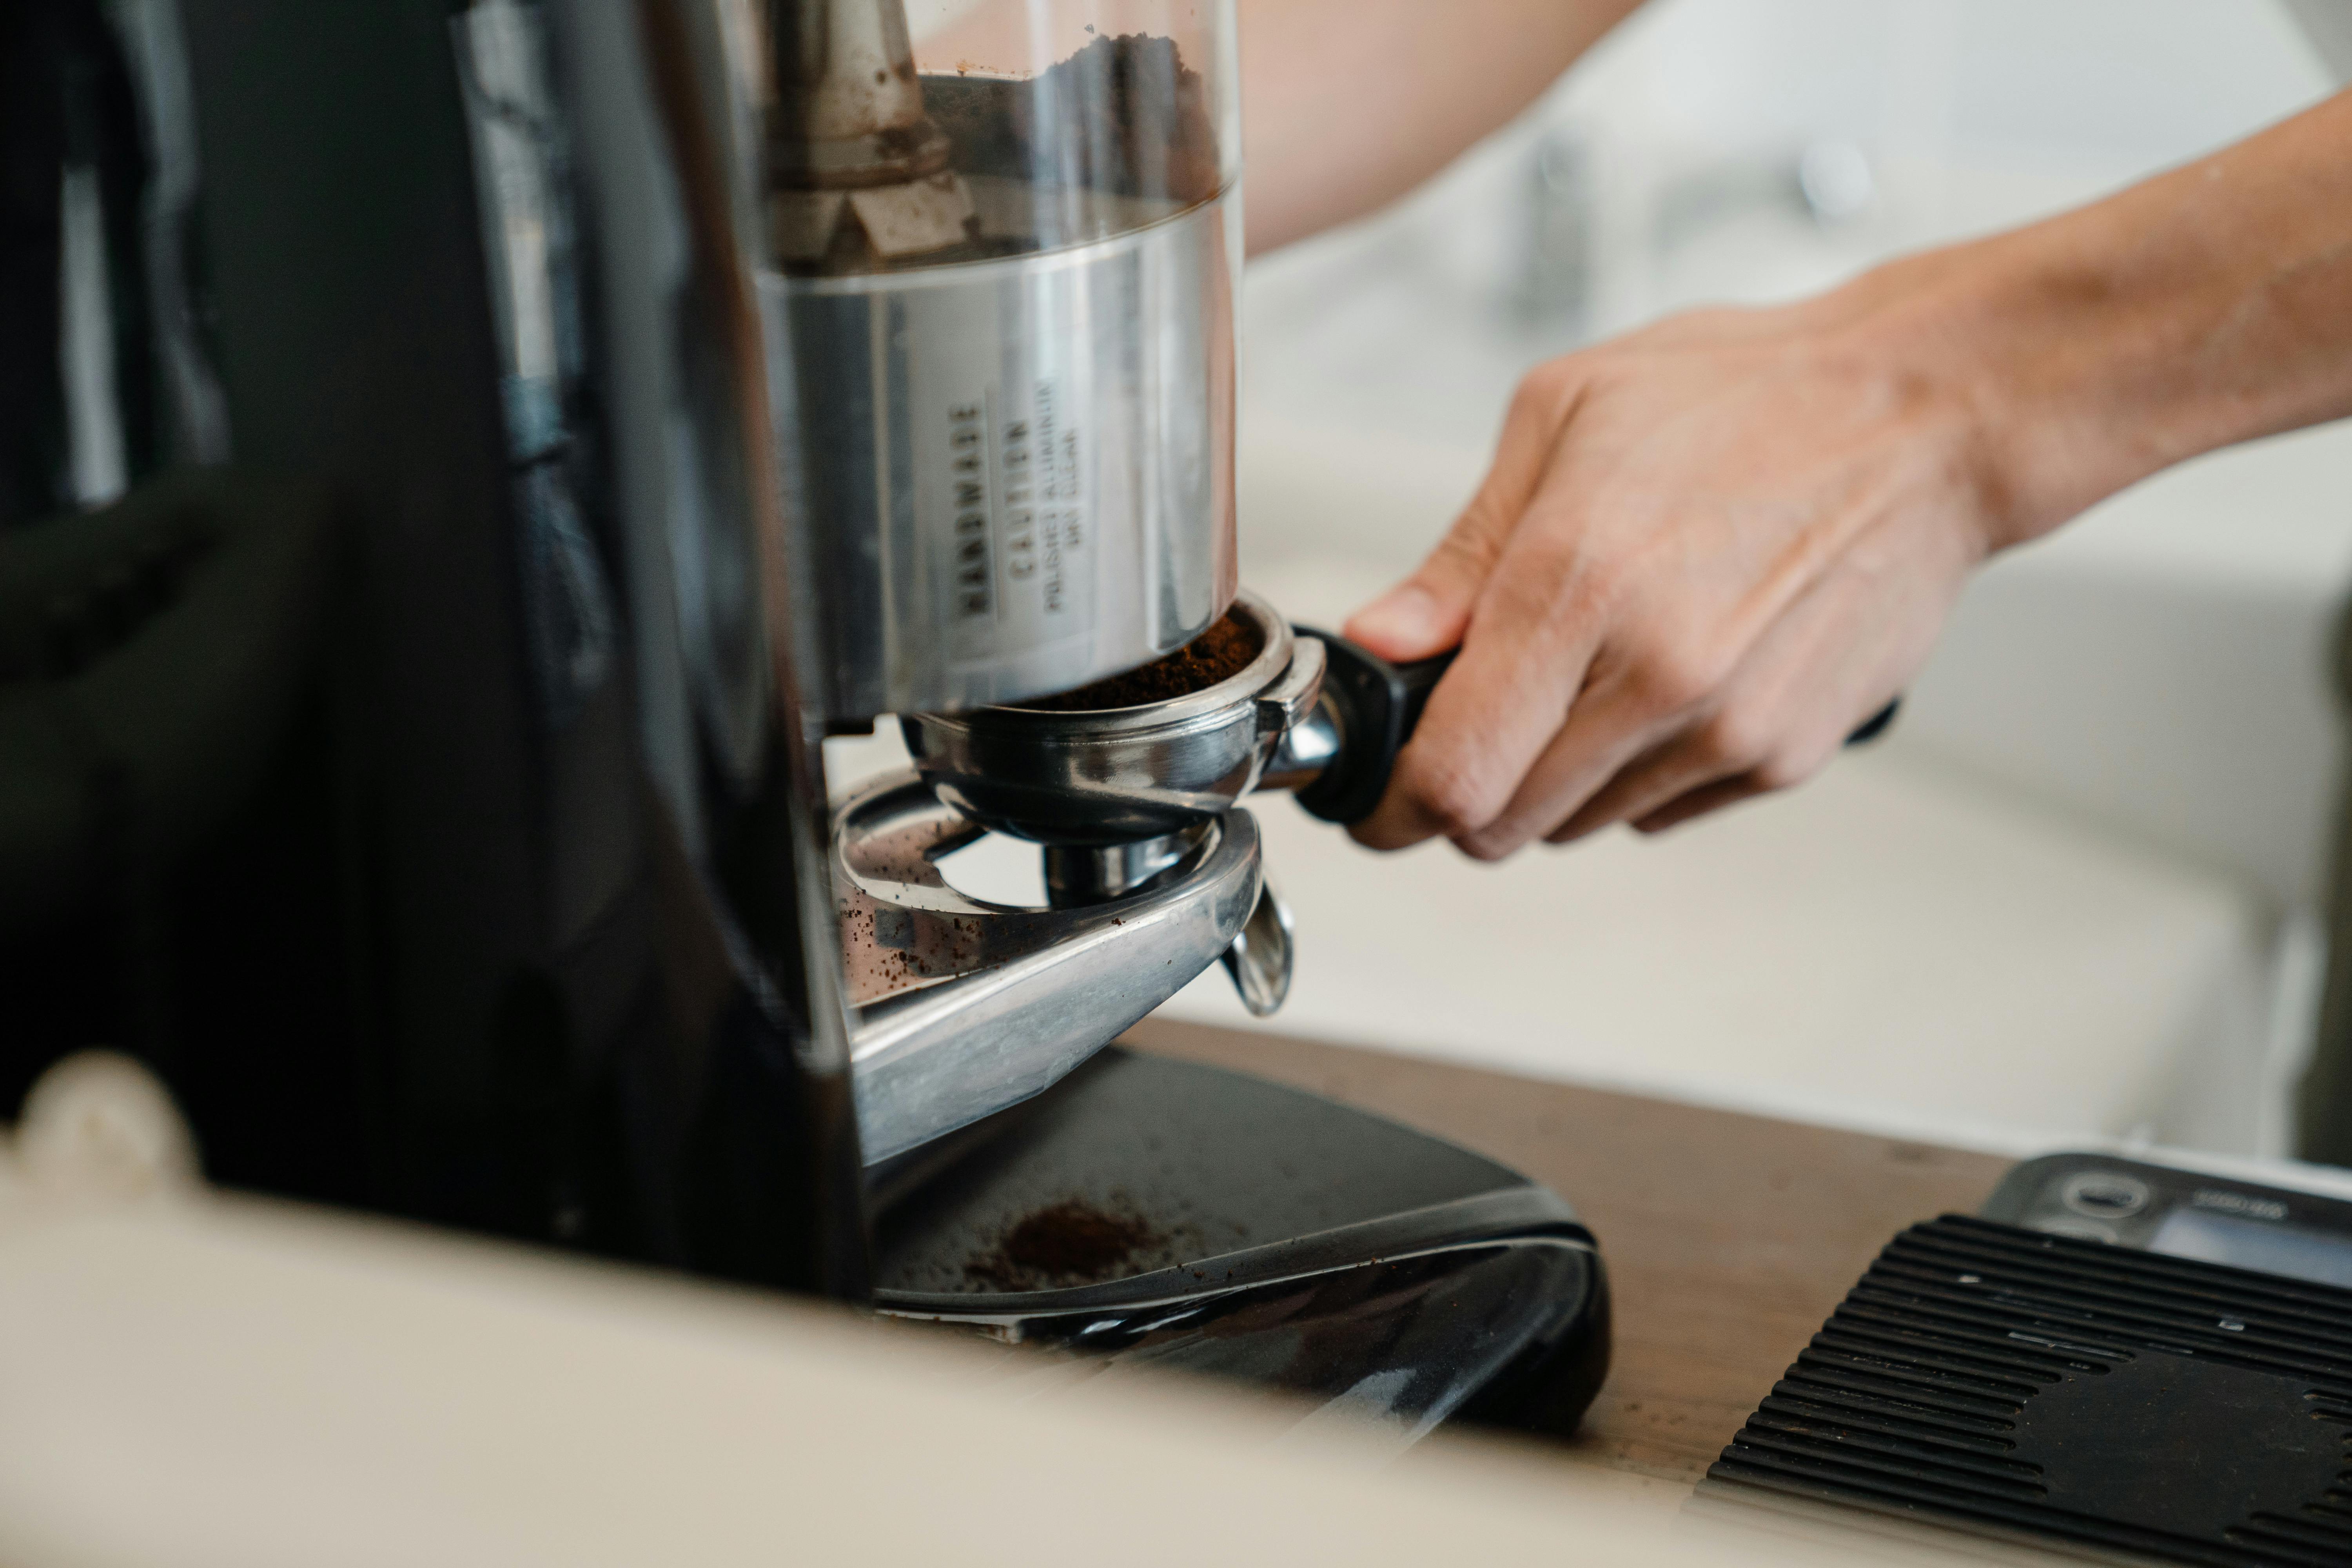 crop person preparing coffee with machine